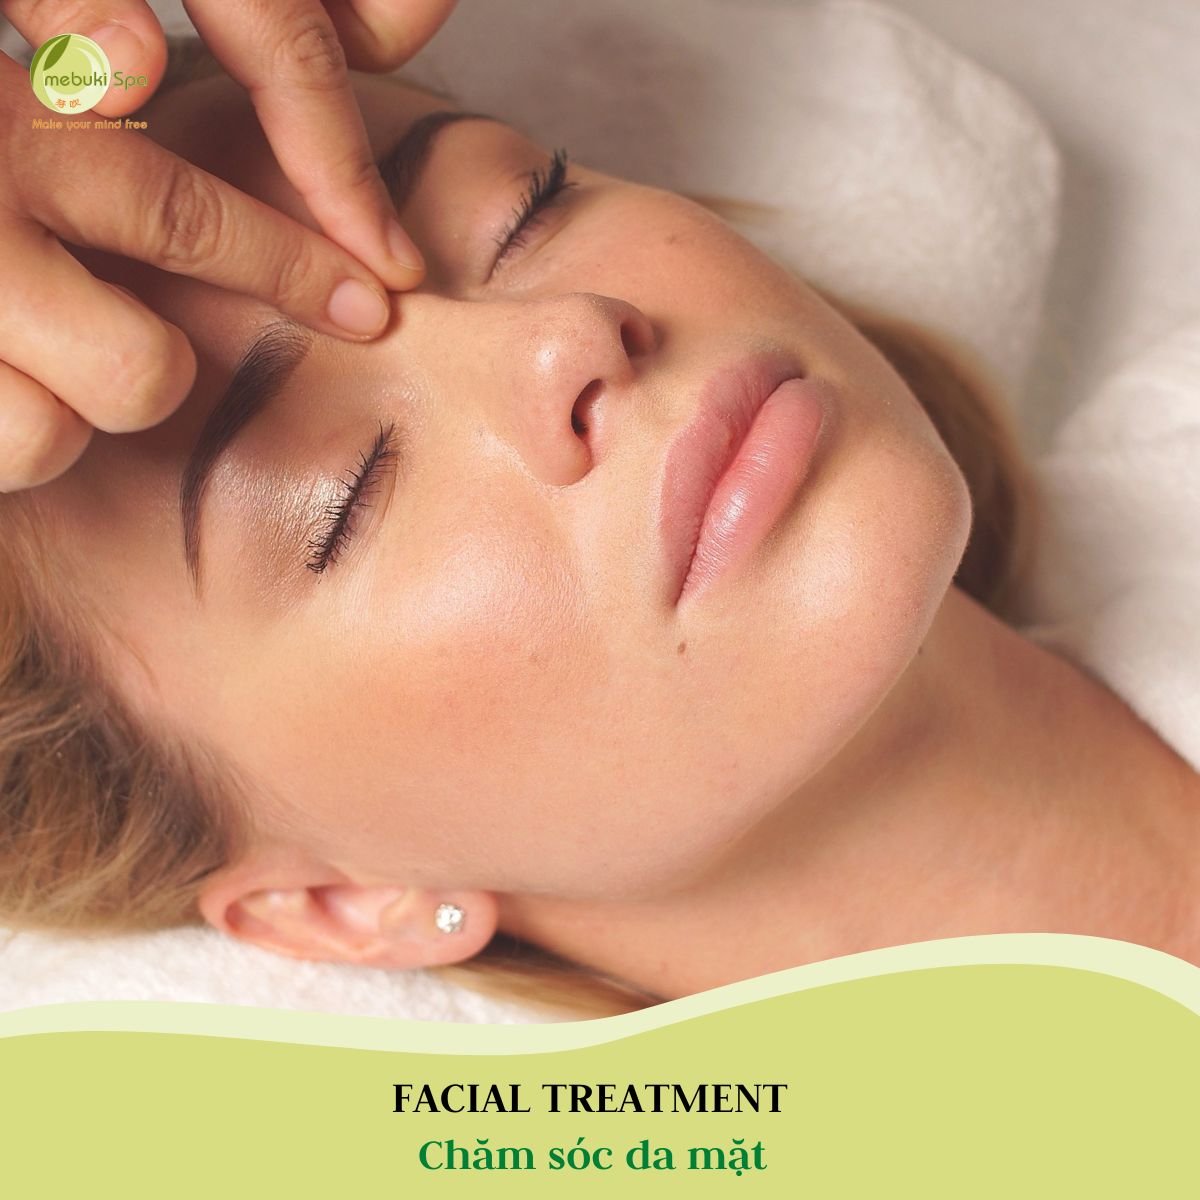 Facial treatment - Chăm sóc da mặt